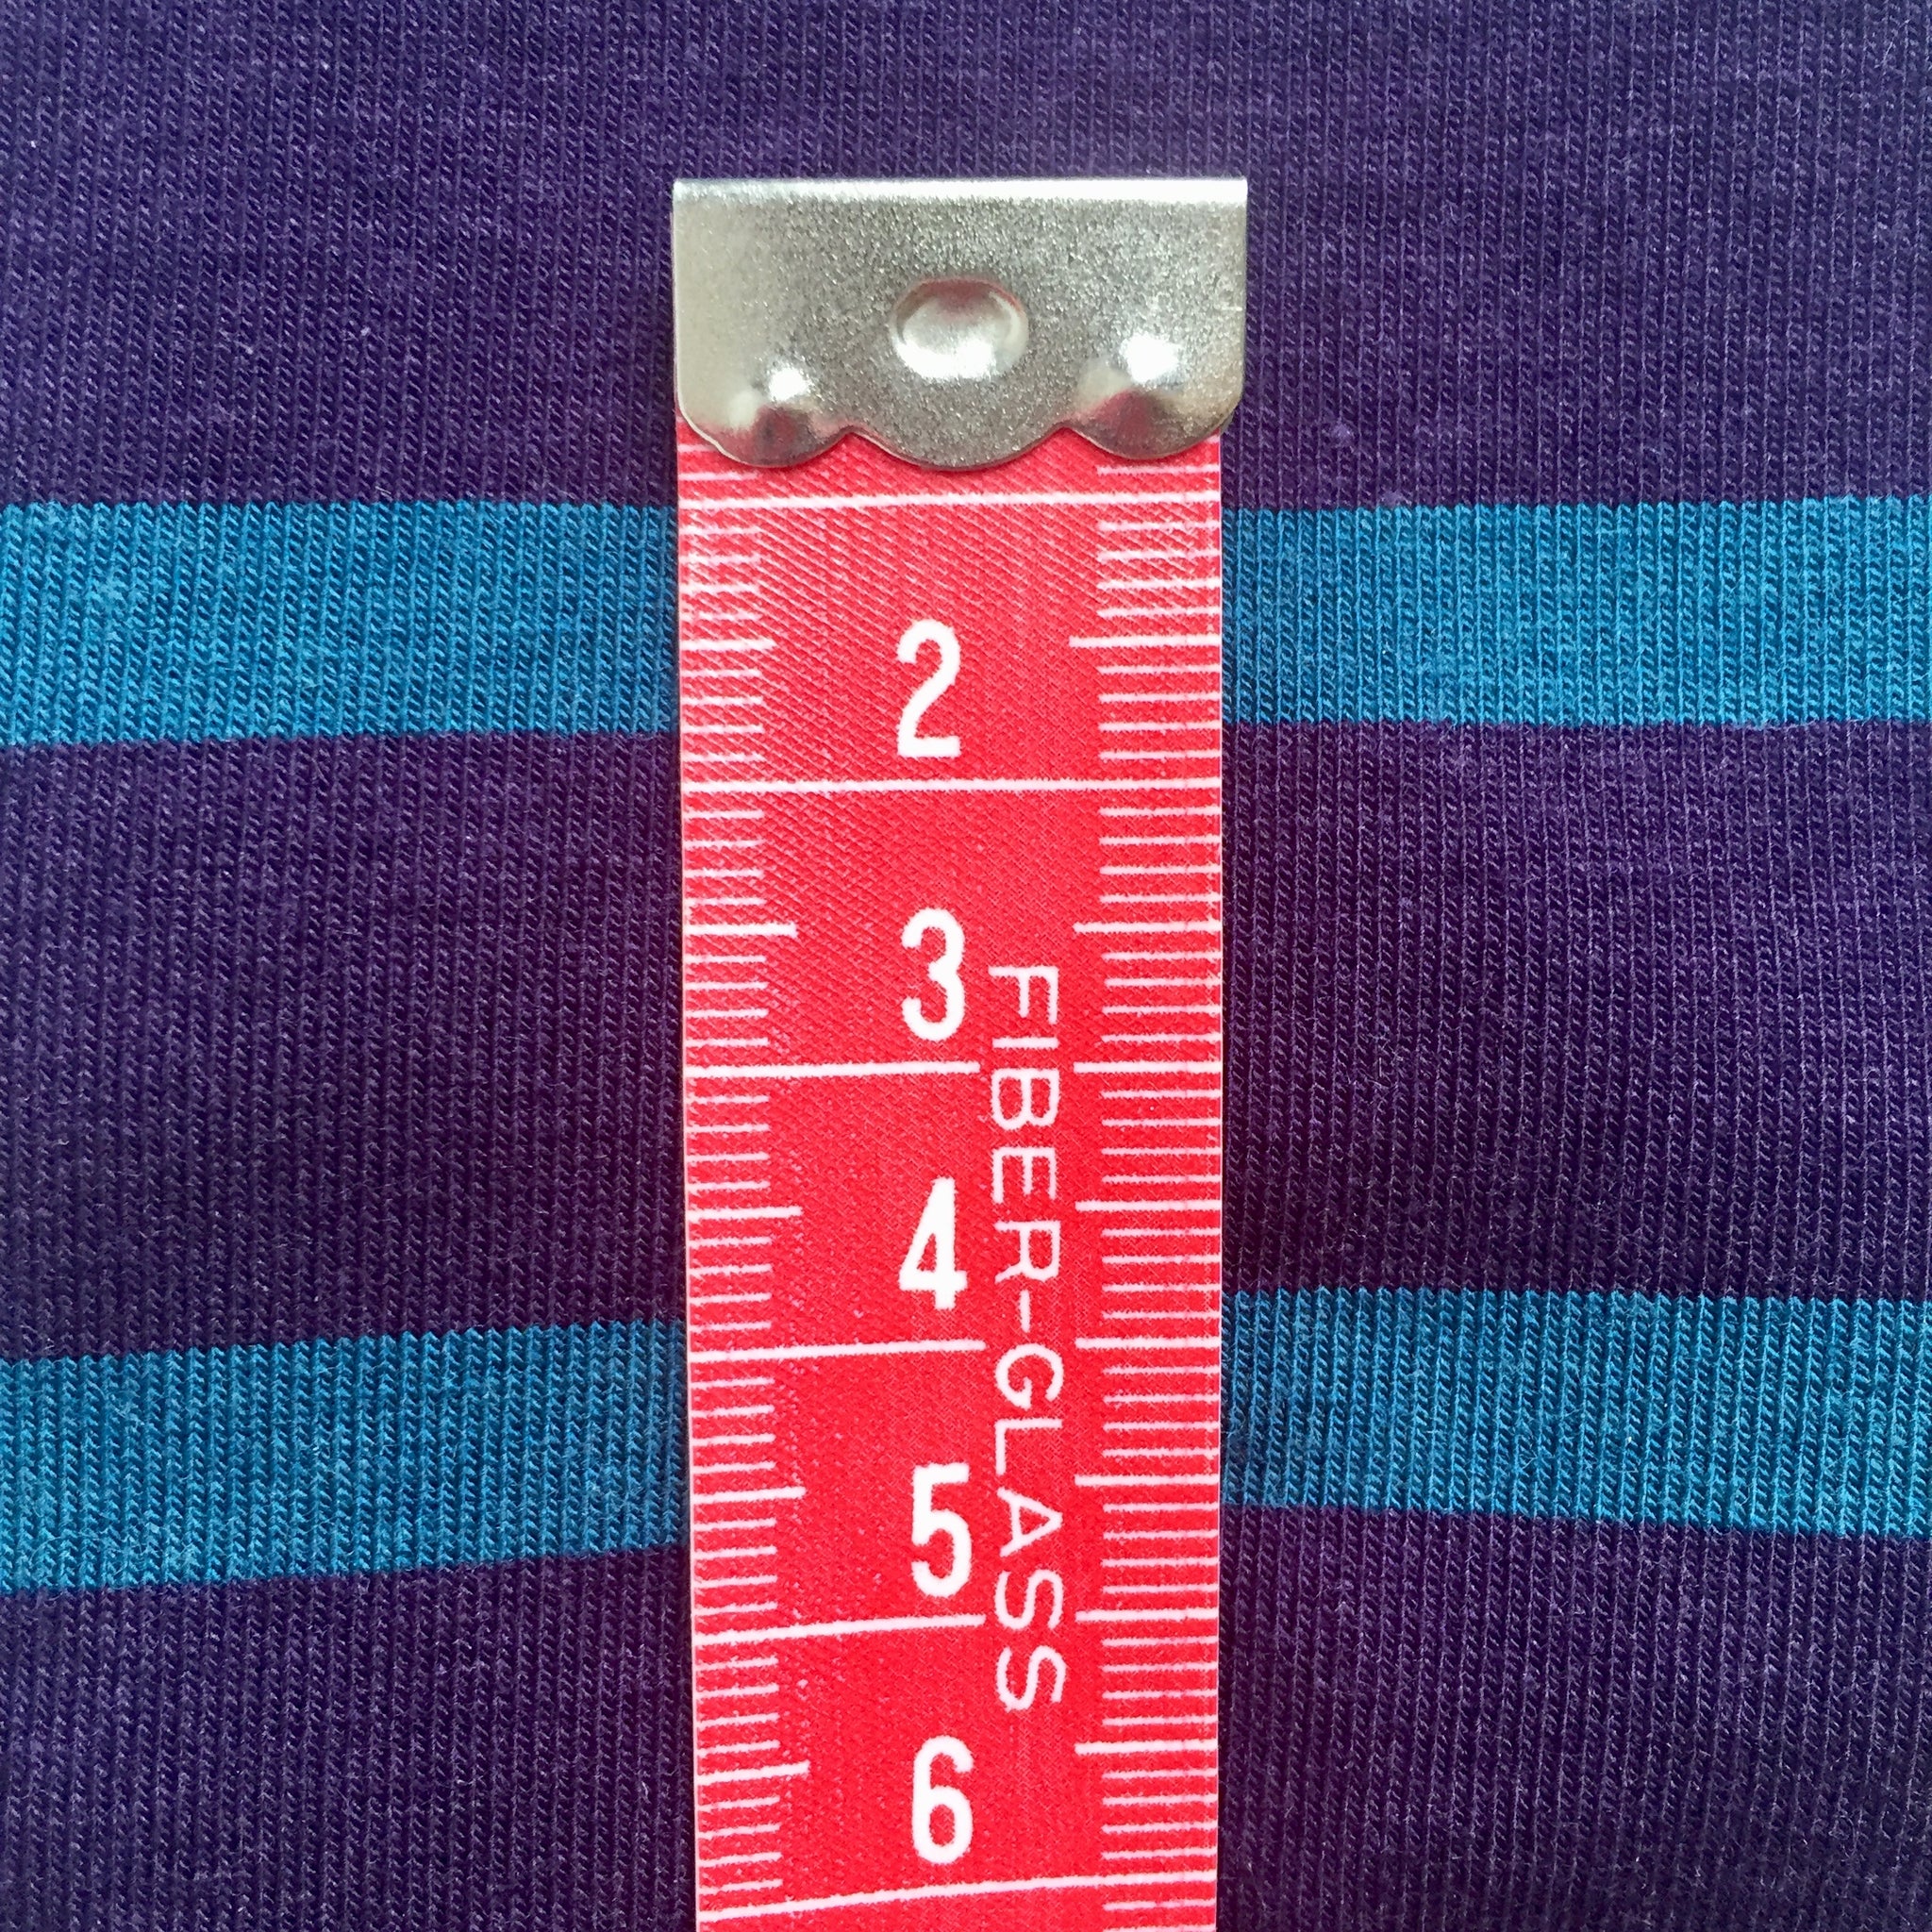 Purple/Blue Stripes 66% Bamboo/28% Cotton Jersey knit - Sewing